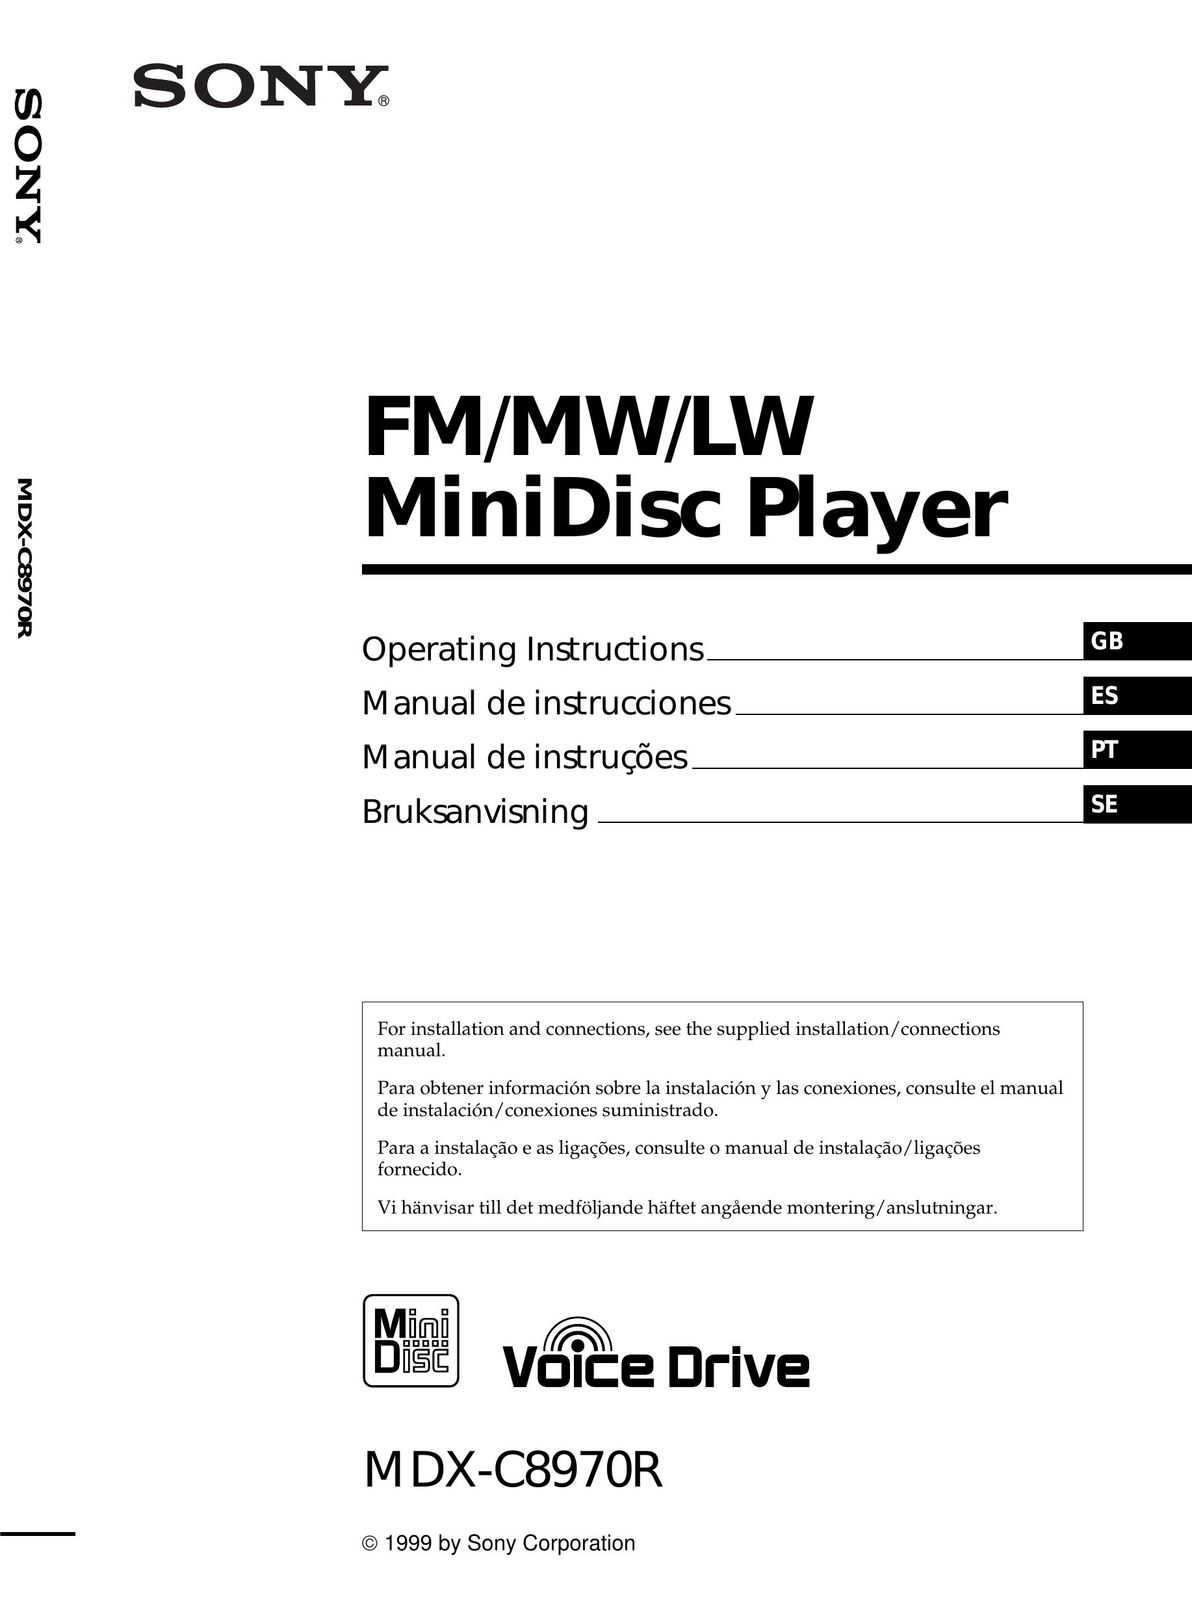 Sony MDX-C8970R MiniDisc Player User Manual